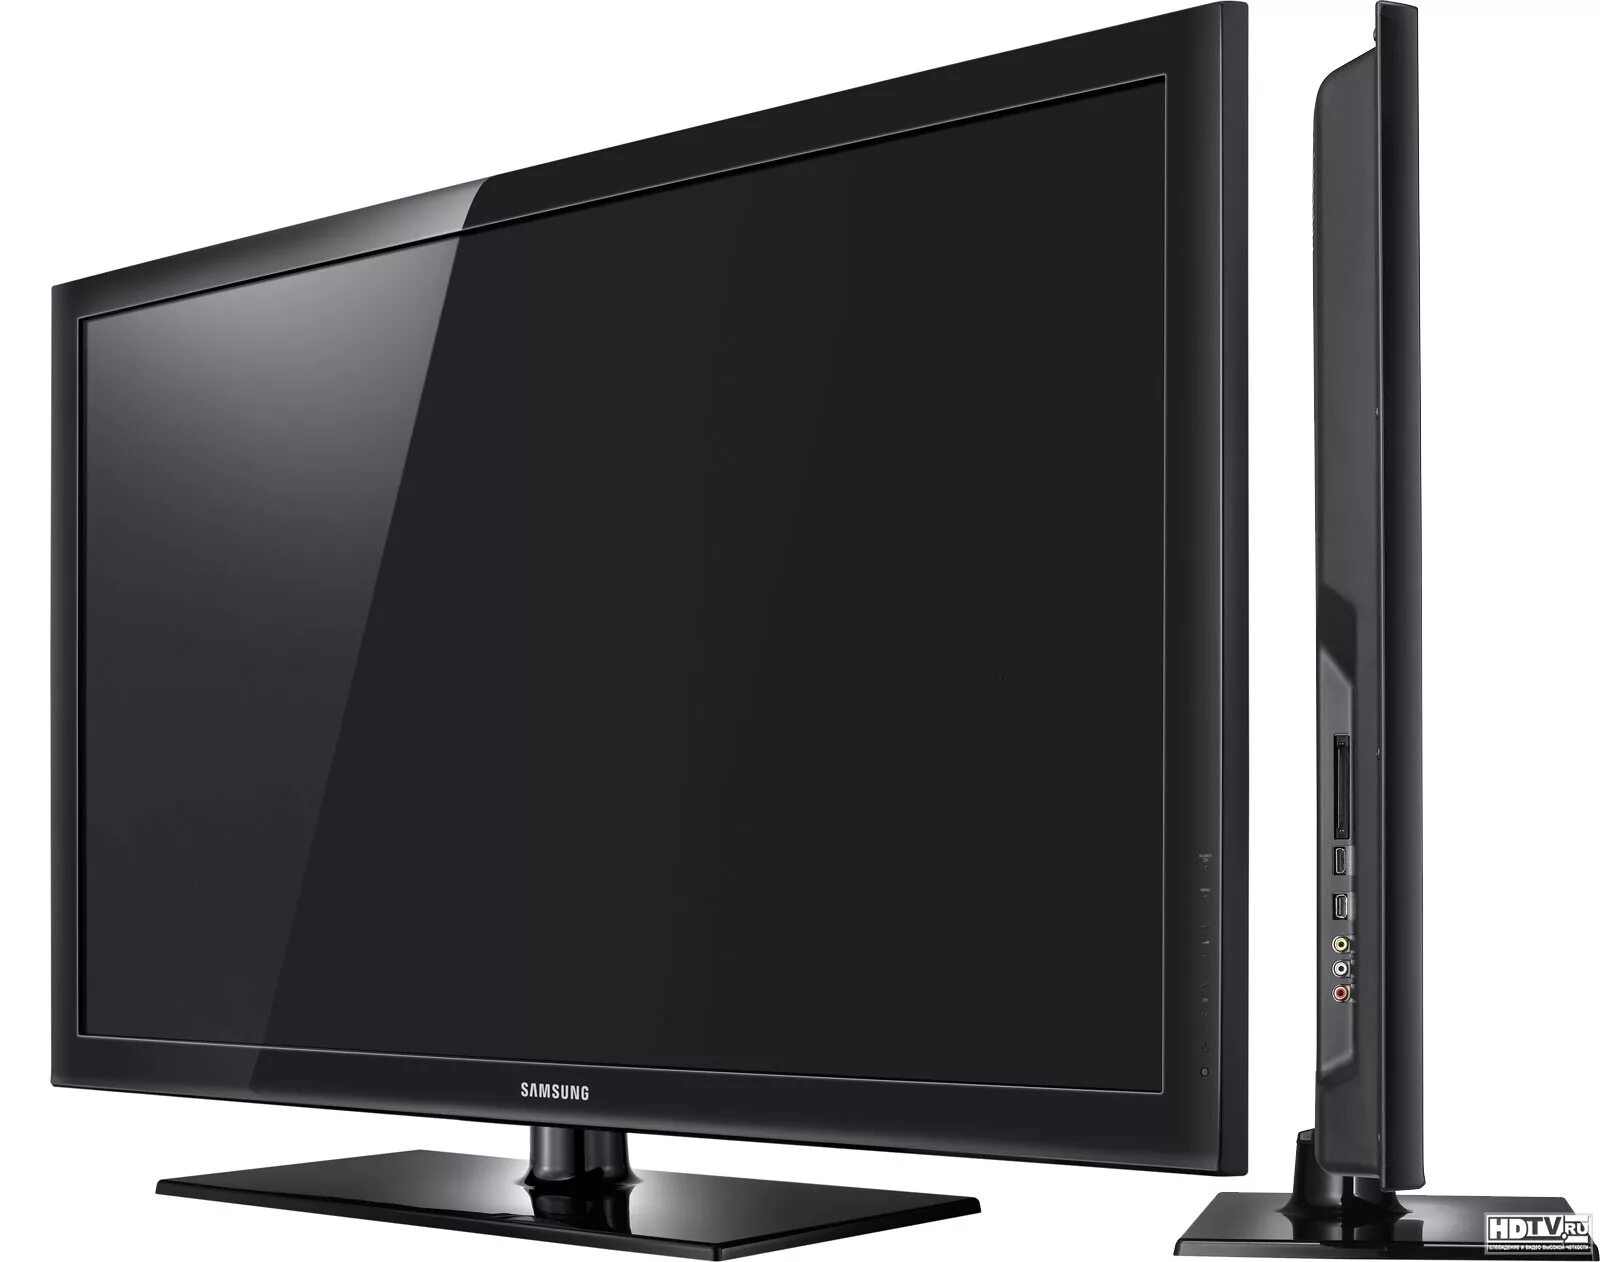 Samsung телевизор ps50c450b1w. Samsung ps50 c450 b1w. Телевизор самсунг плазма 42 дюйма. Телевизор Samsung PS-50c430 50".